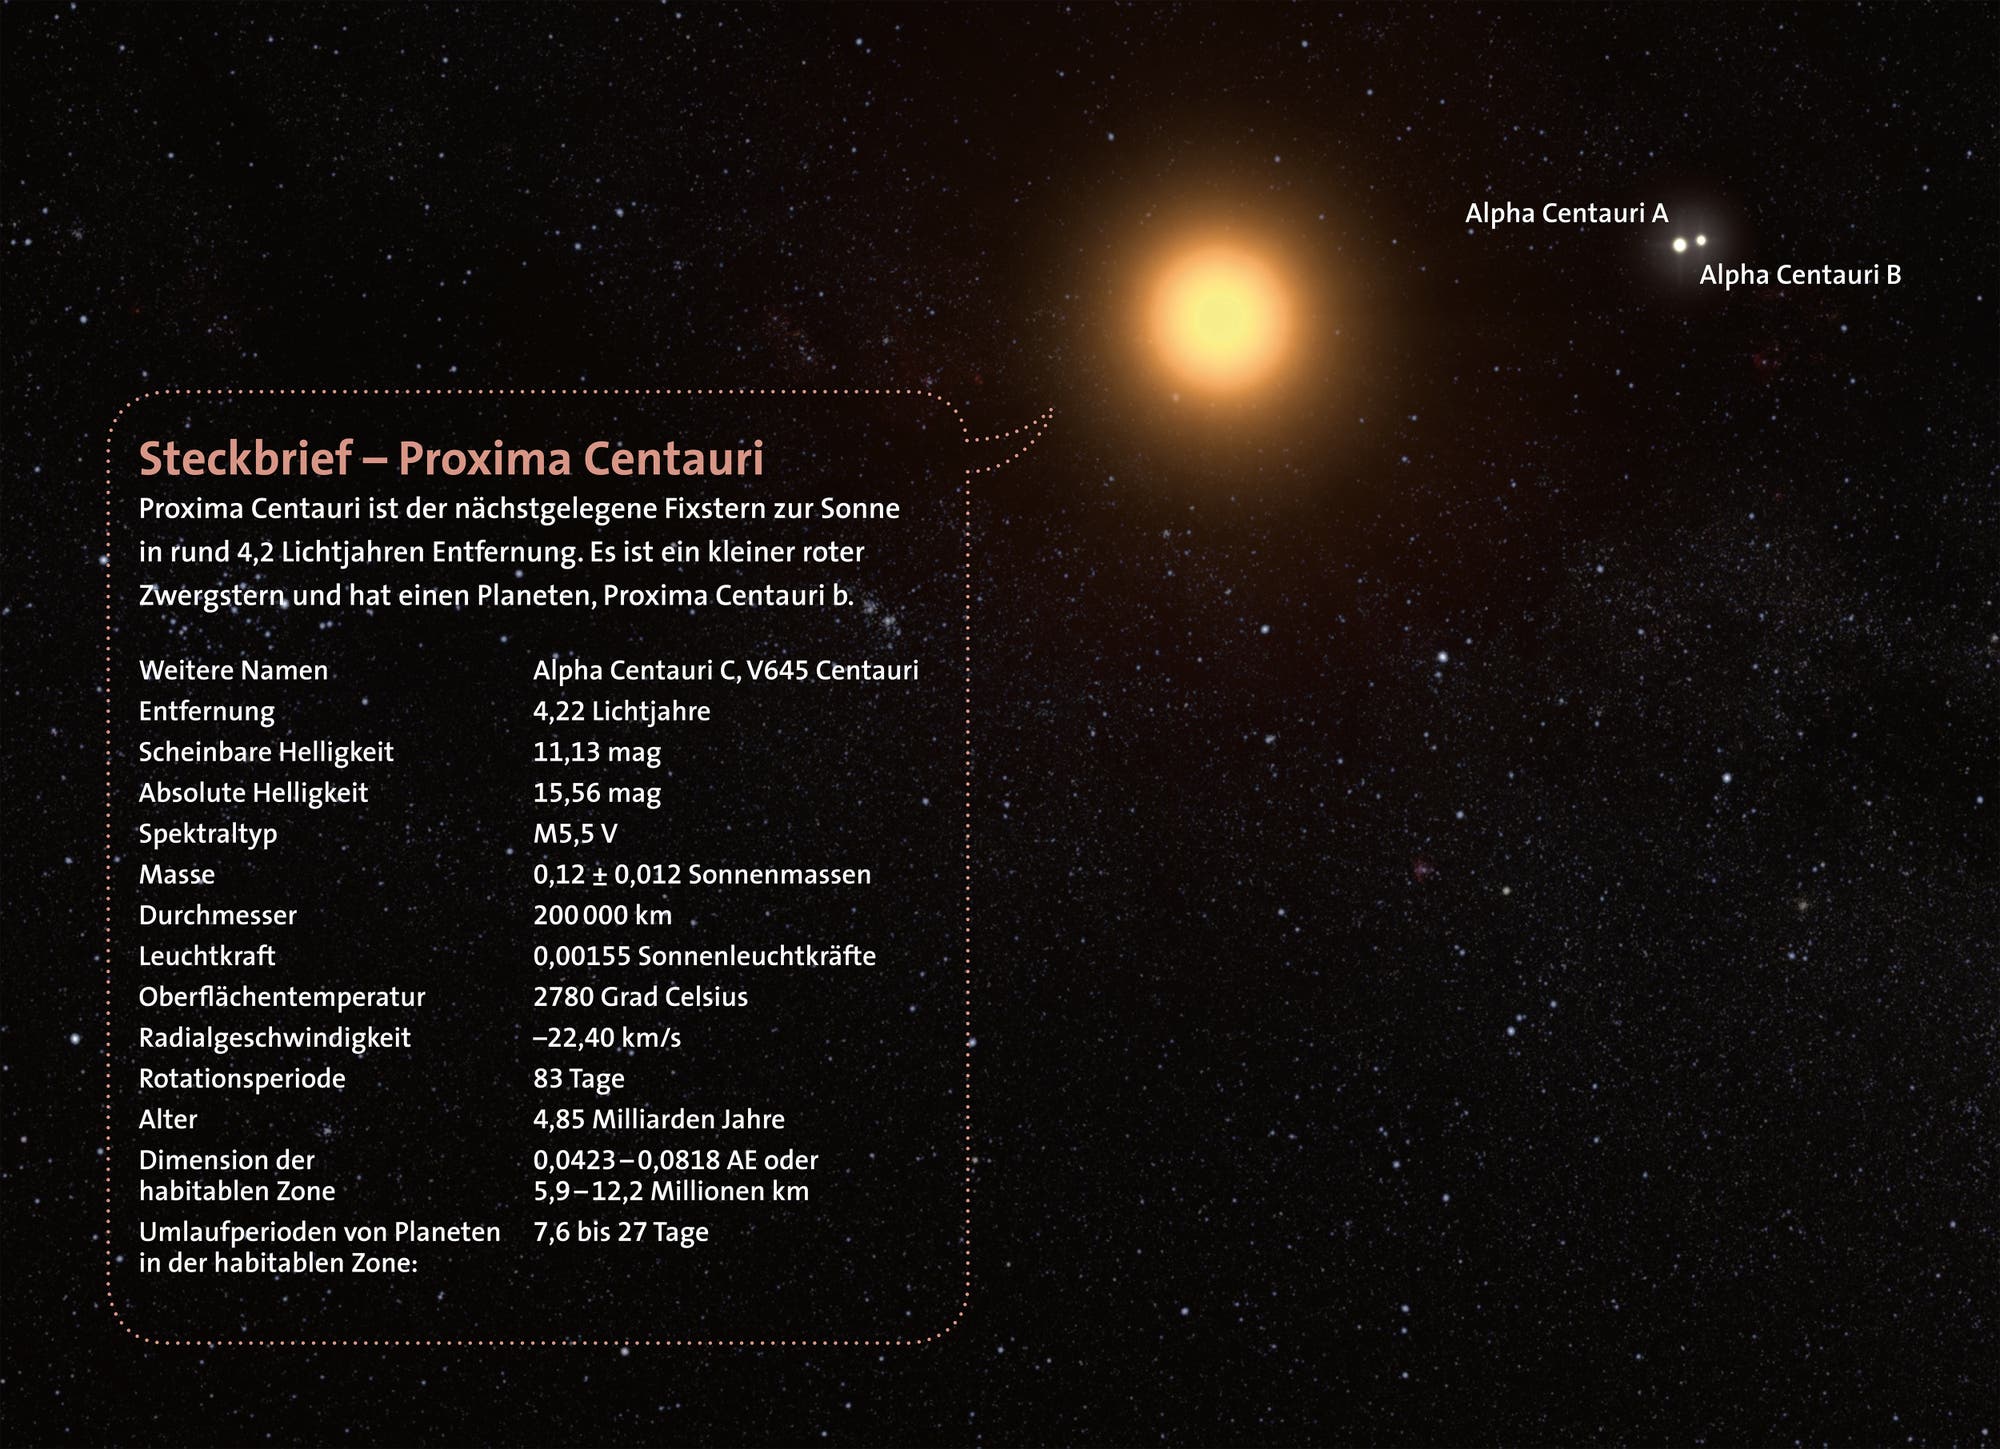 Steckbrief Proxima Centauri